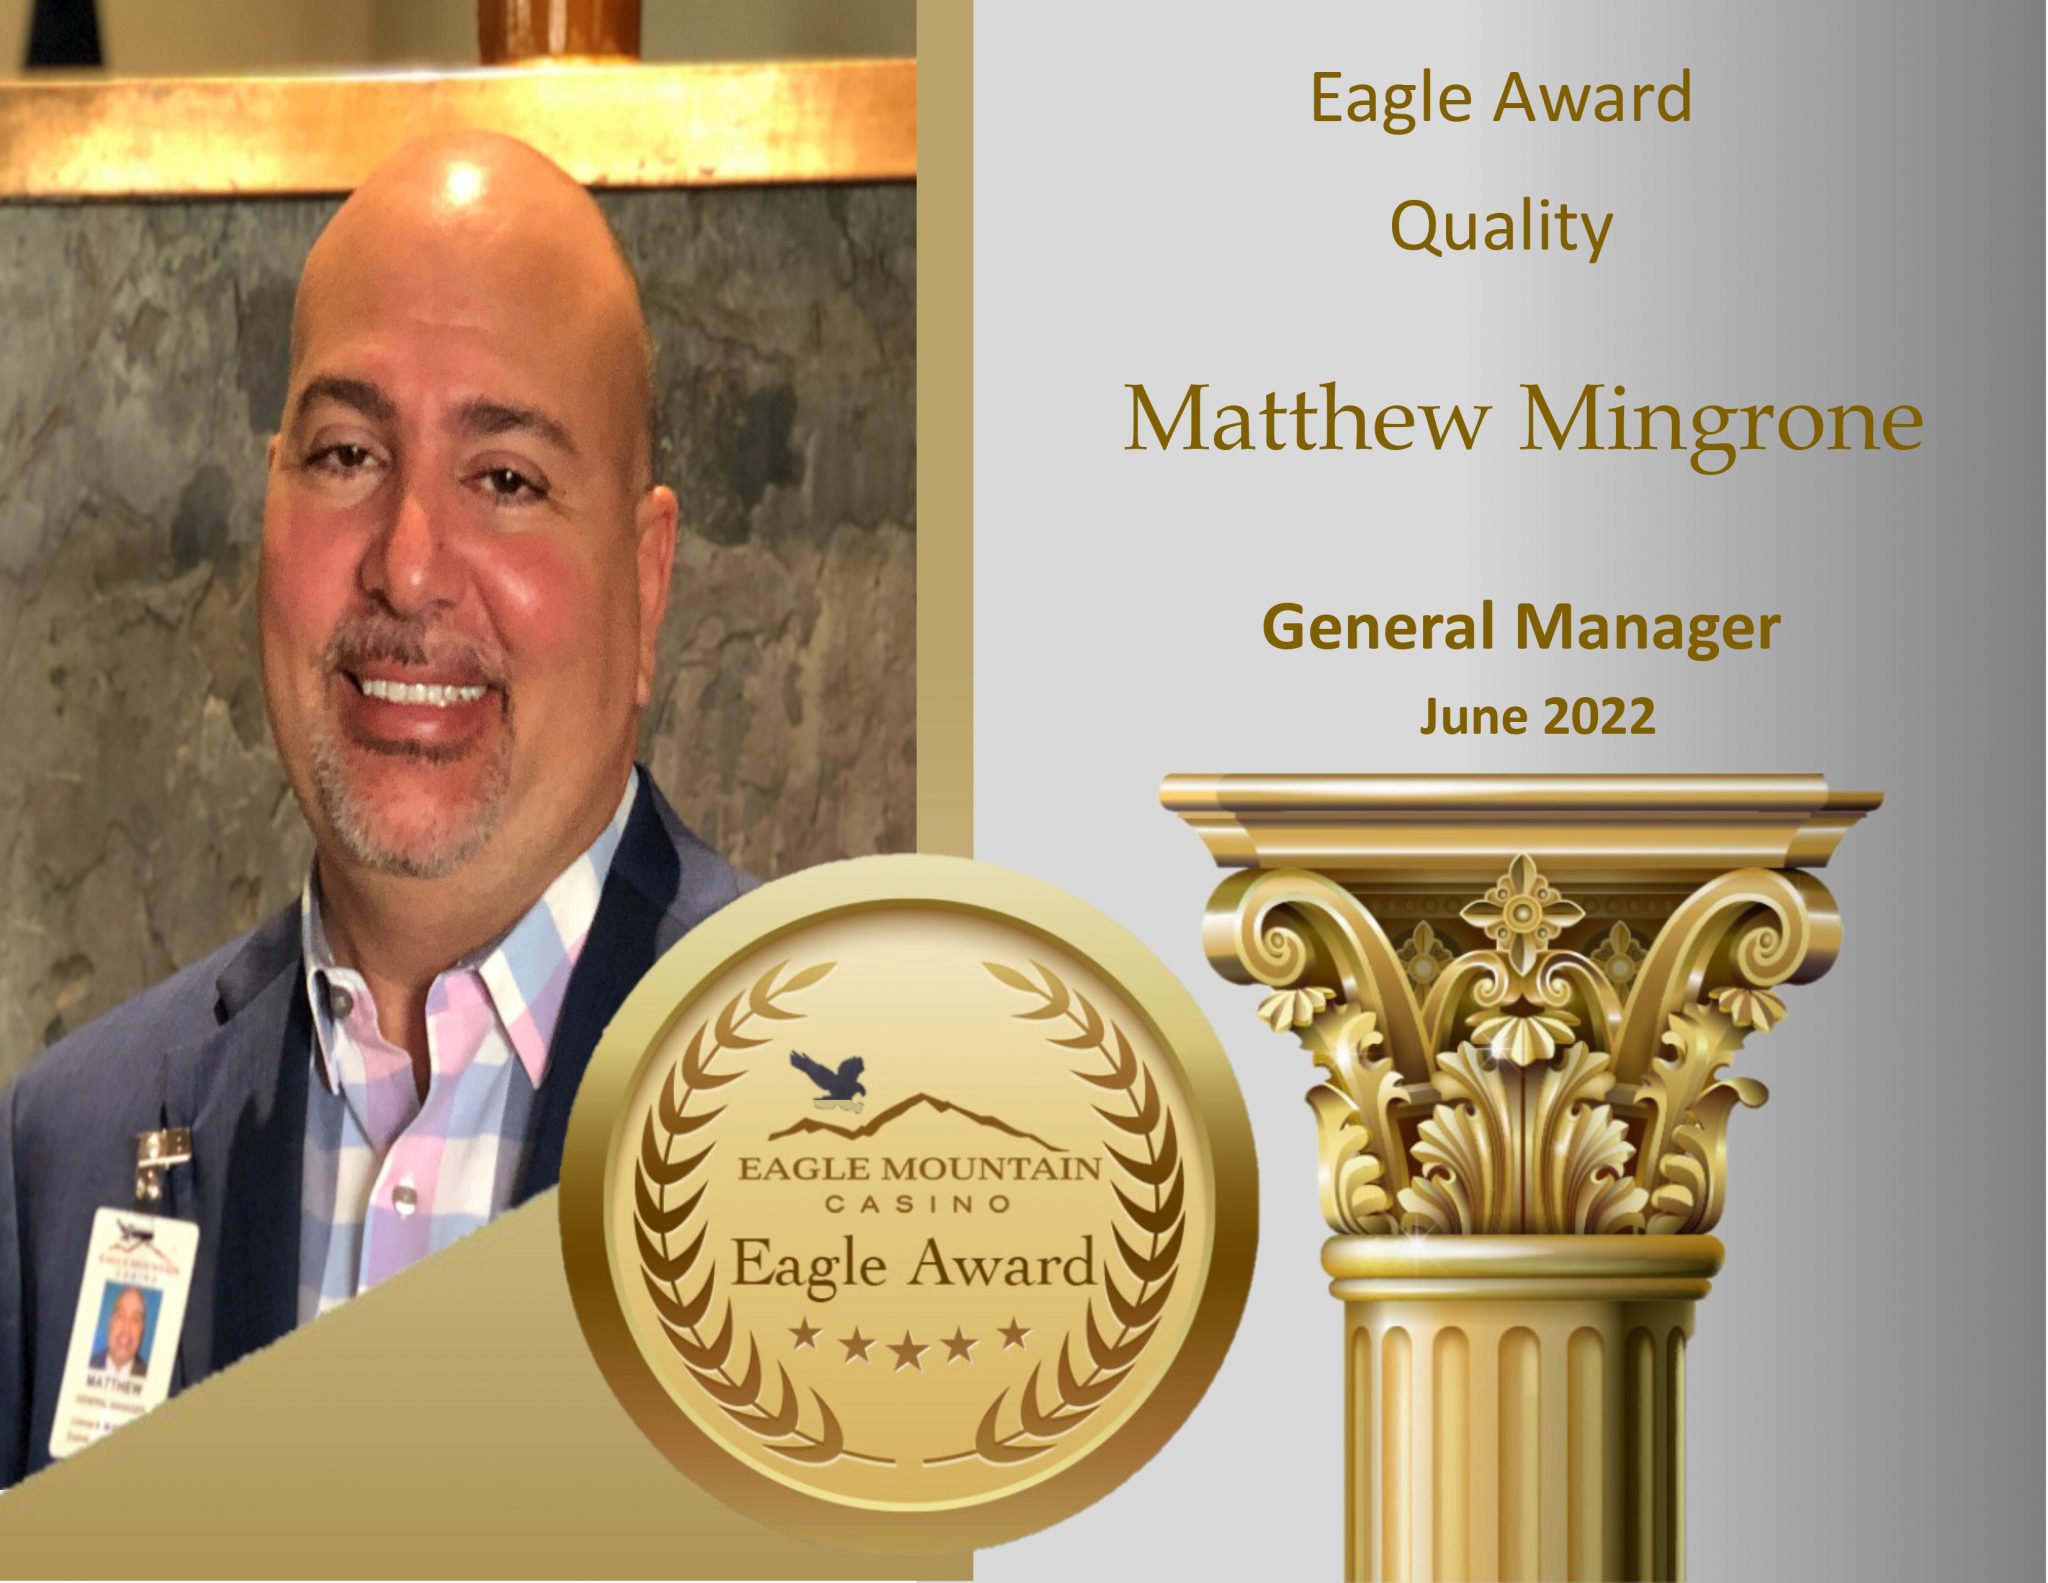 eagle mountain casino Matthew Mingrone Quality Pillar Winner June 22